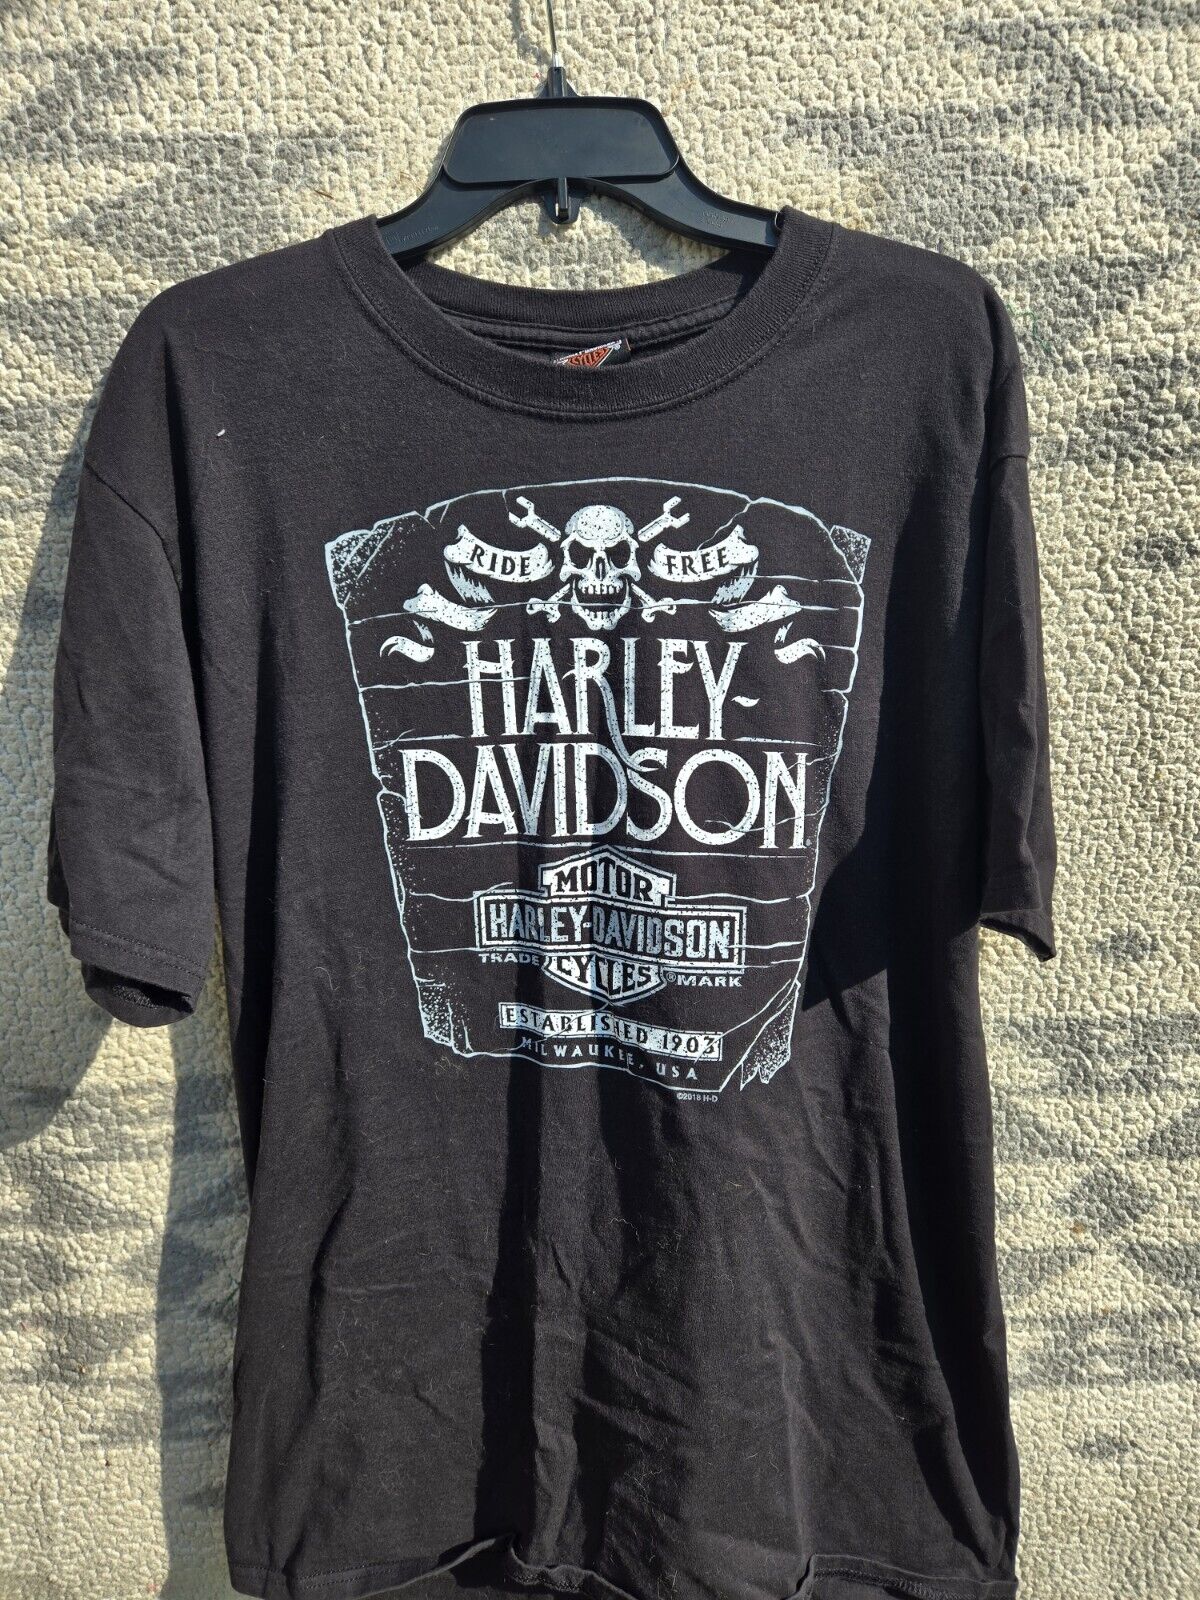 Harley Davidson Shirt Large Tall Scotland Ride Free Skull